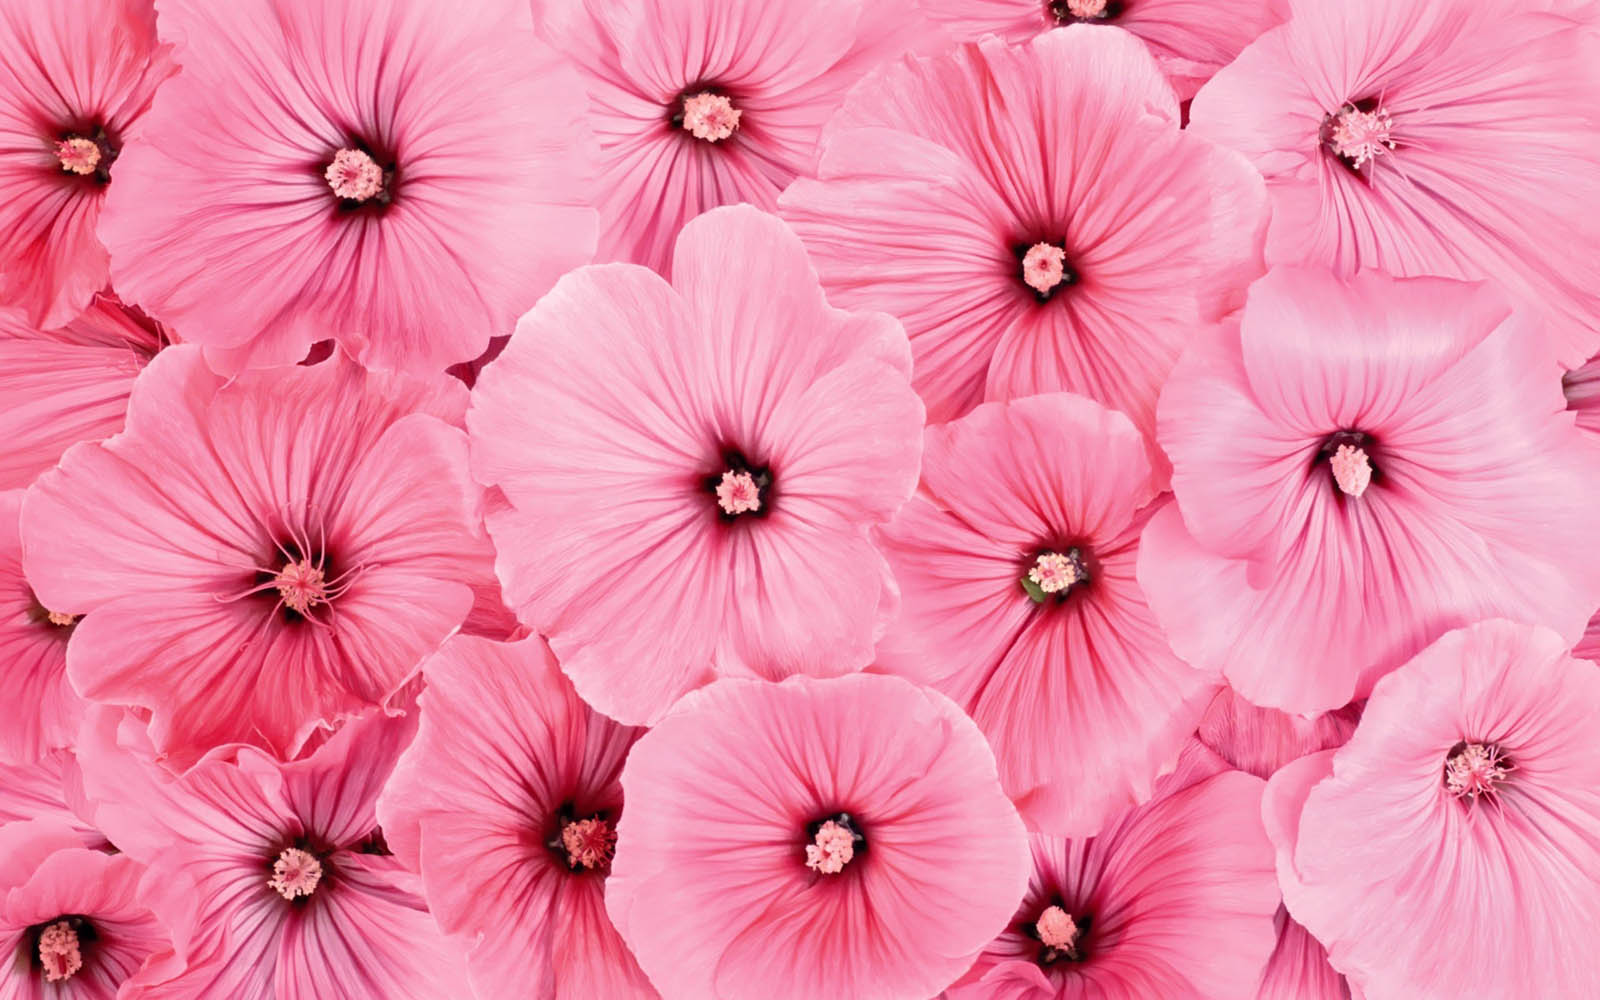  Desktop Wallpapers Pink Flowers Desktop Backgrounds Pink Flowers